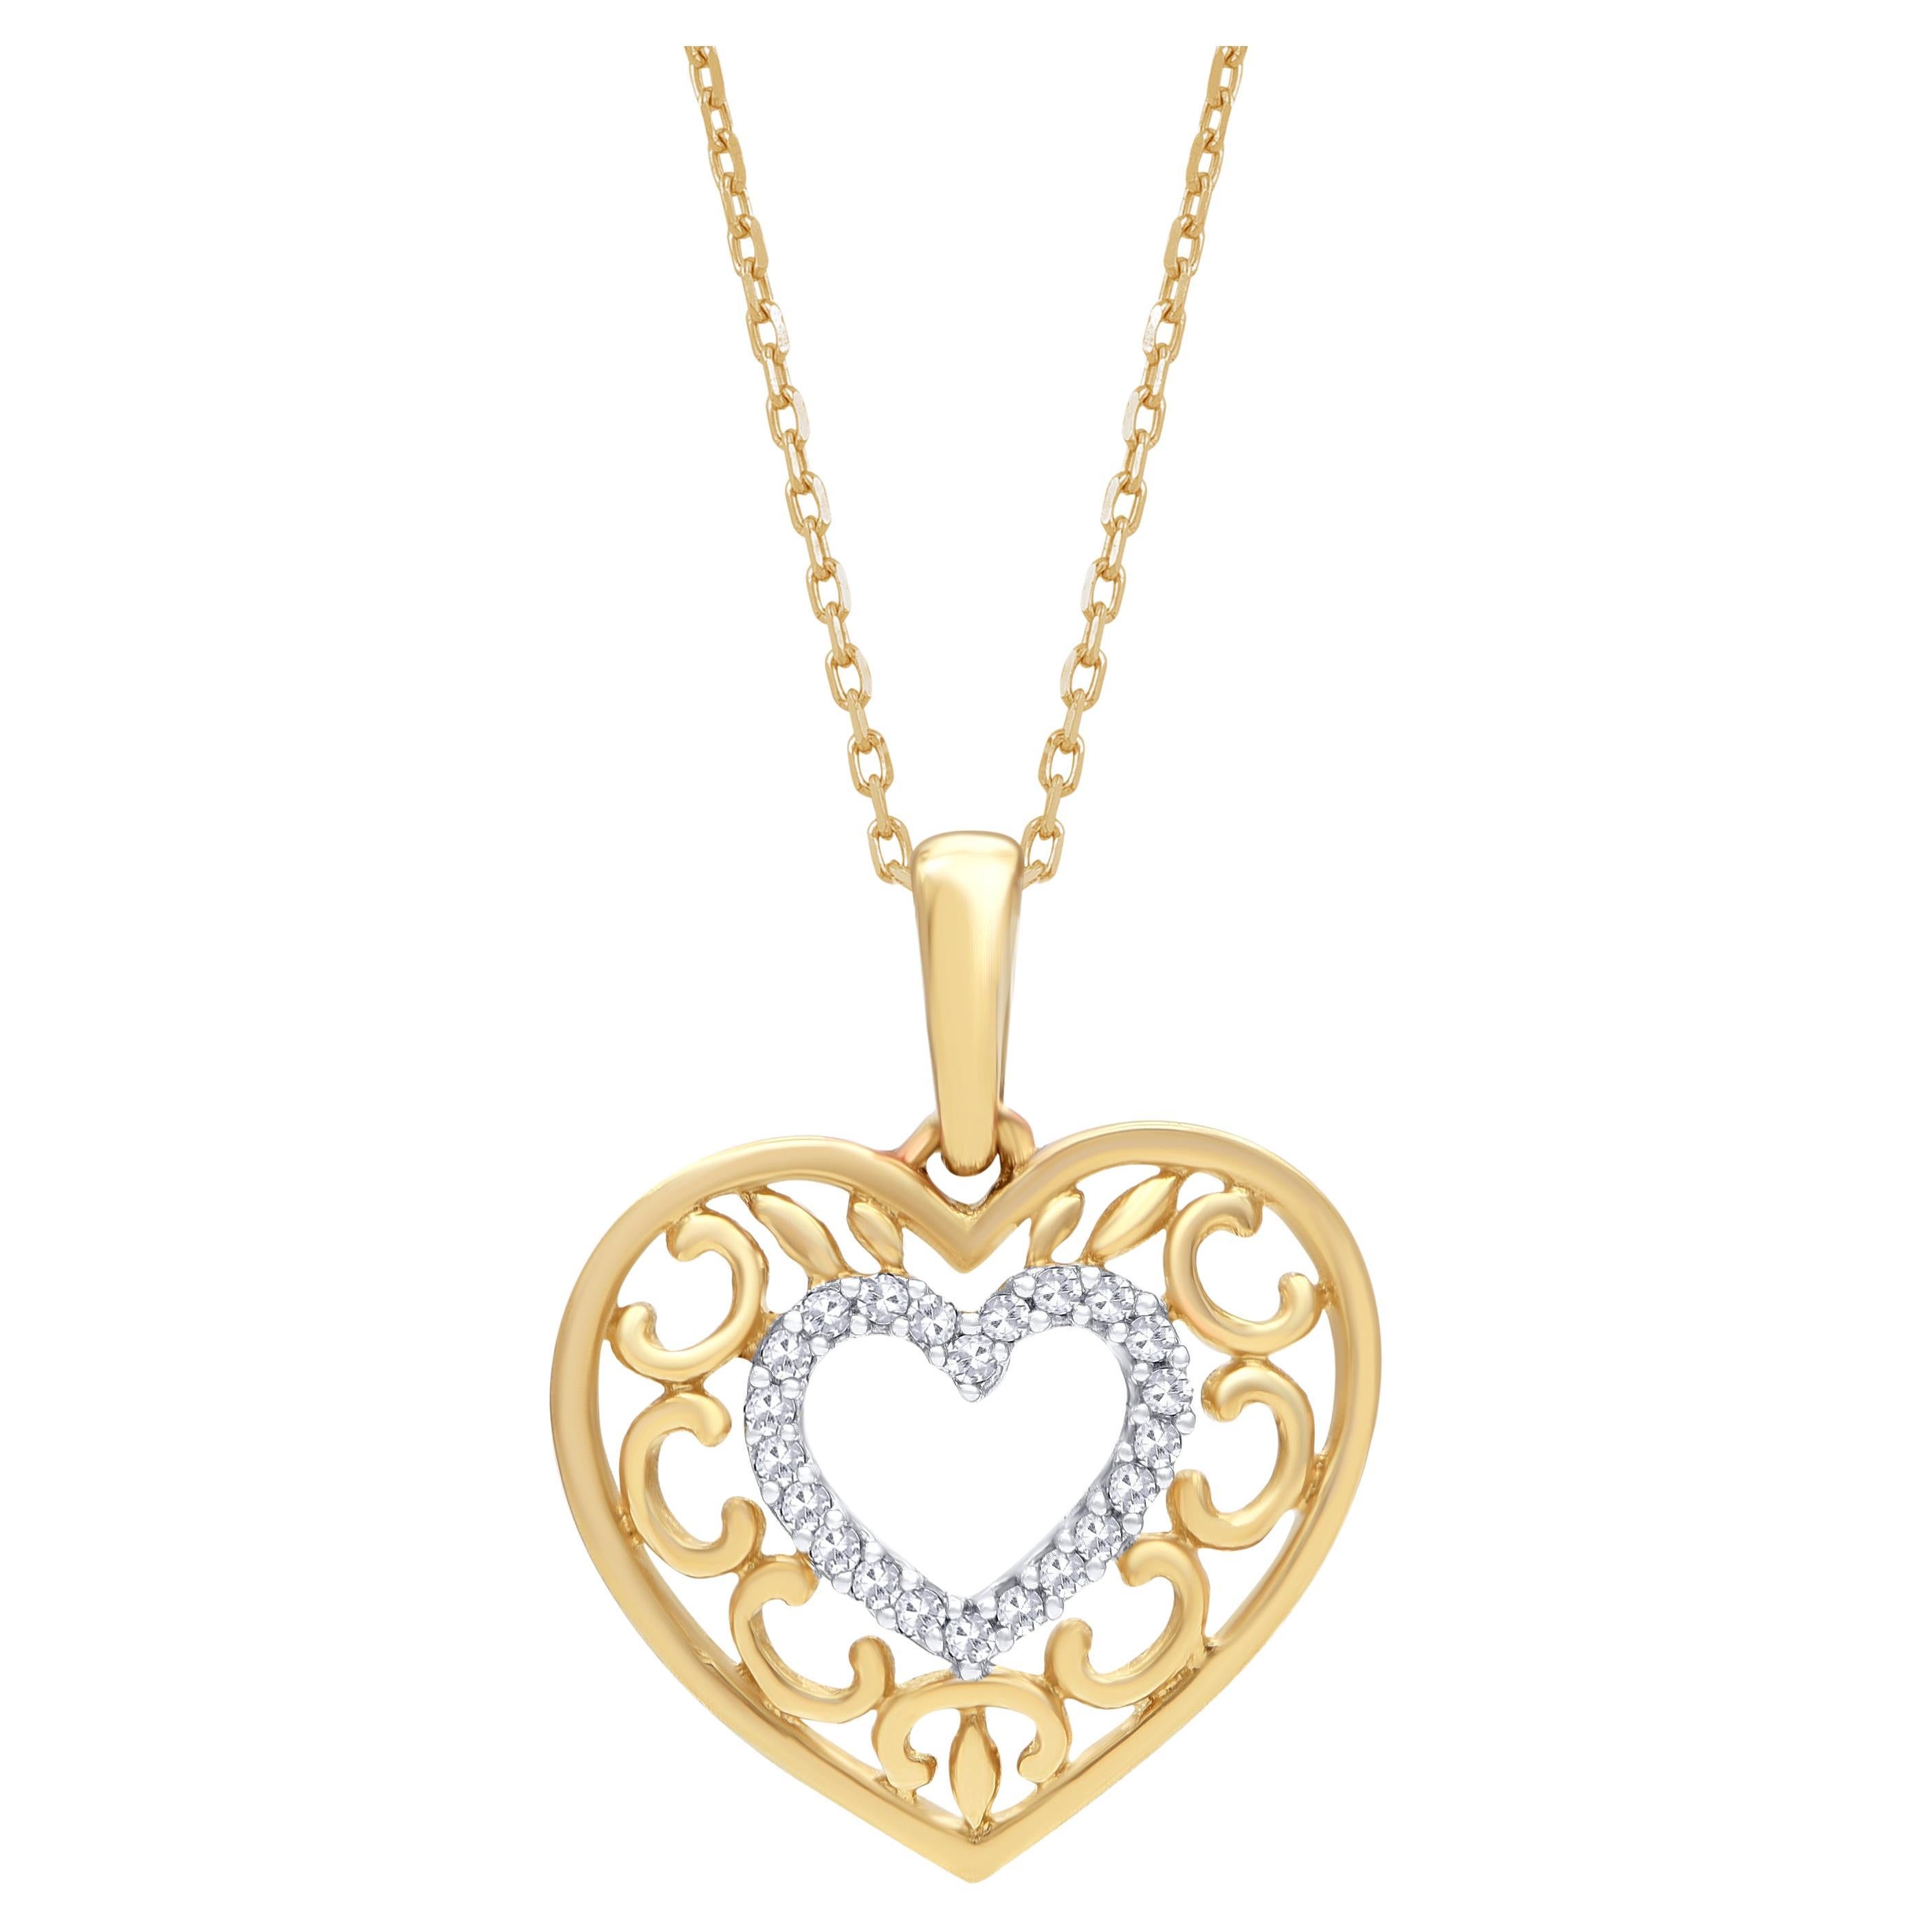 TJD 0.04 Carat Round Diamond 14 Karat Yellow Gold Heart Pendant Necklace